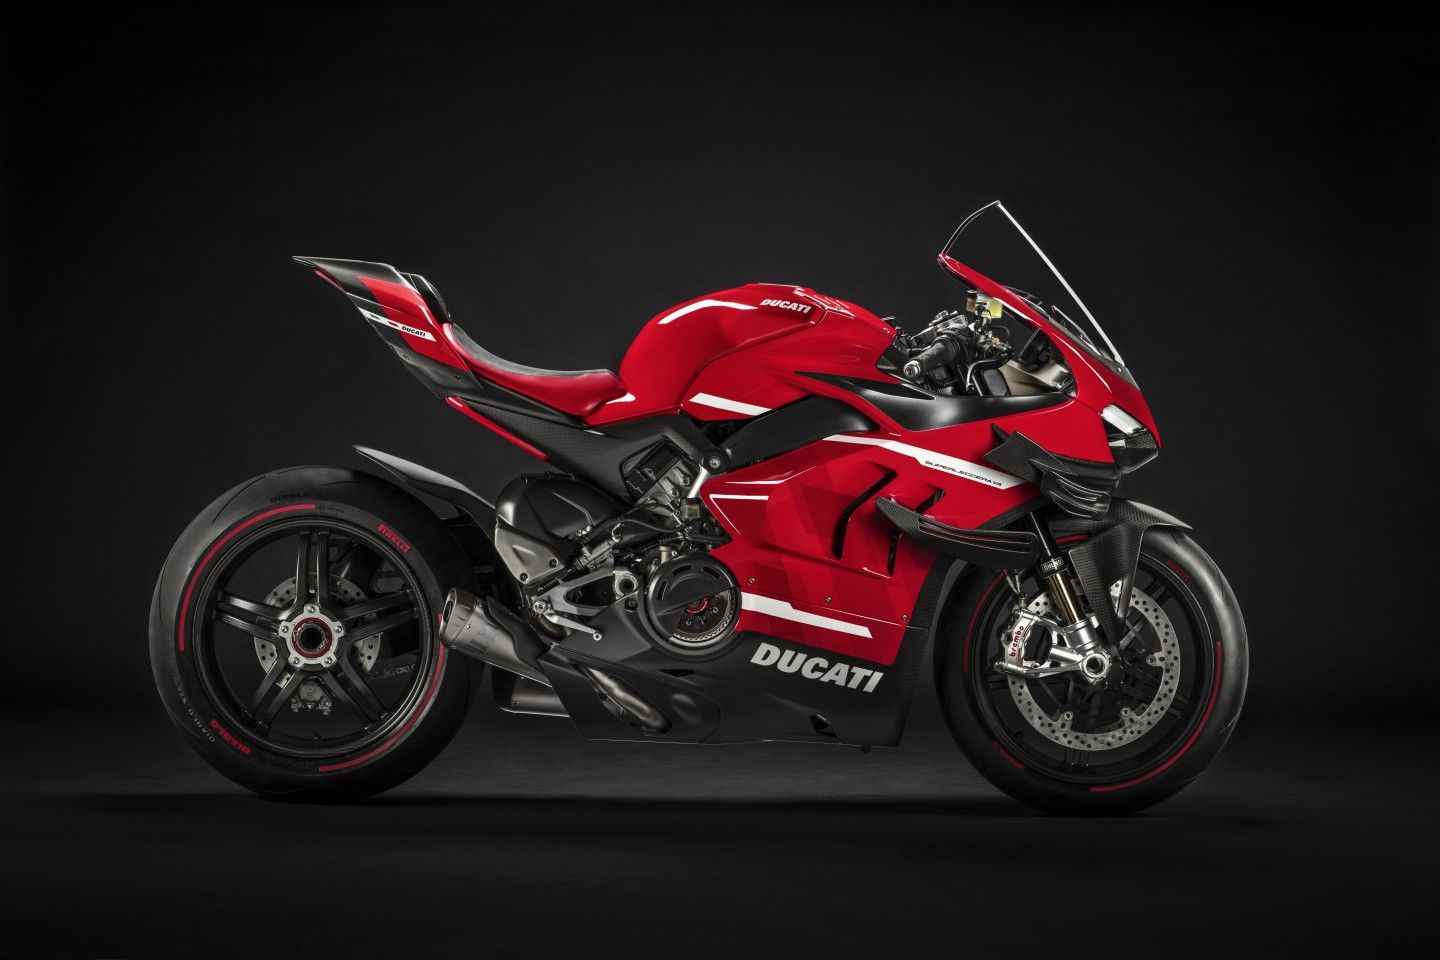 Ducati's Wild, Winged Superleggera V4 Is A Power To Weight Juggernaut